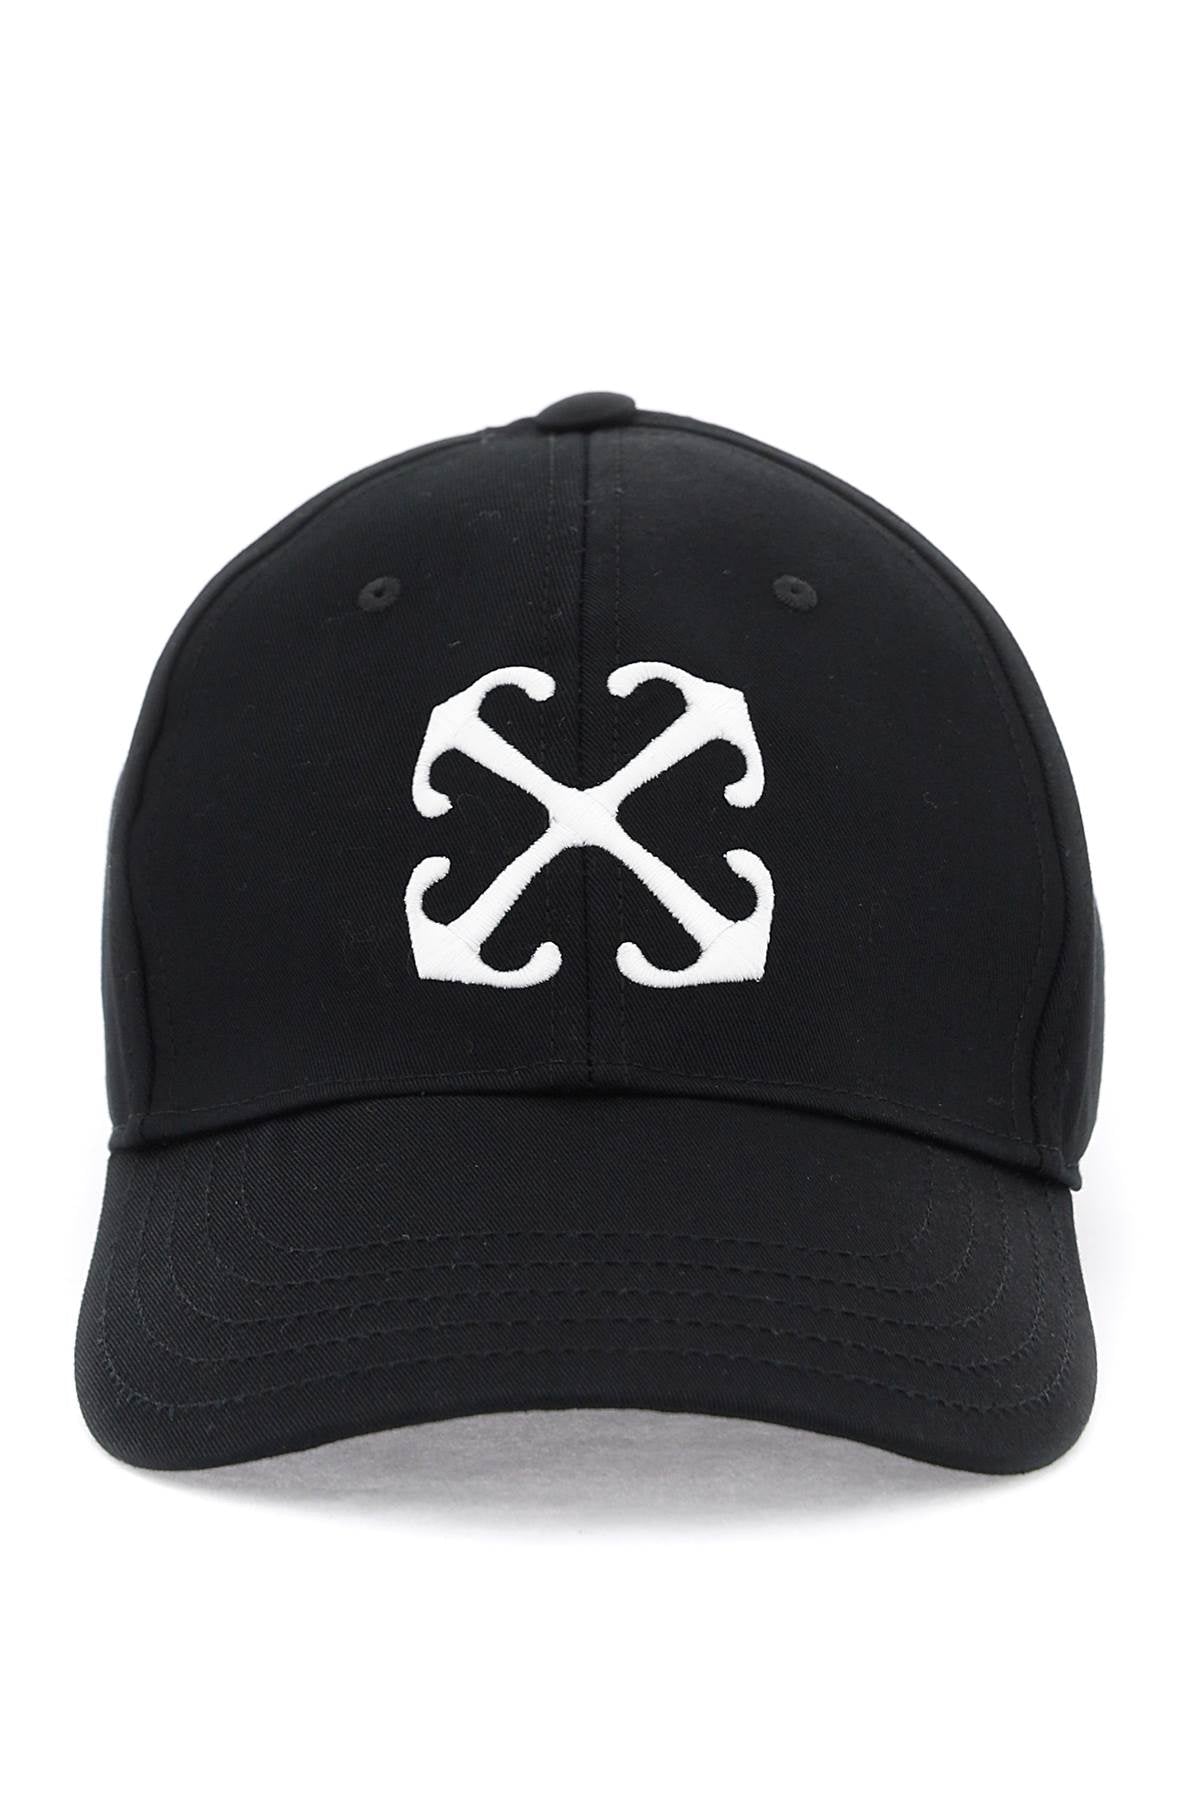 Off-white "arrow logo baseball cap with adjustable-0